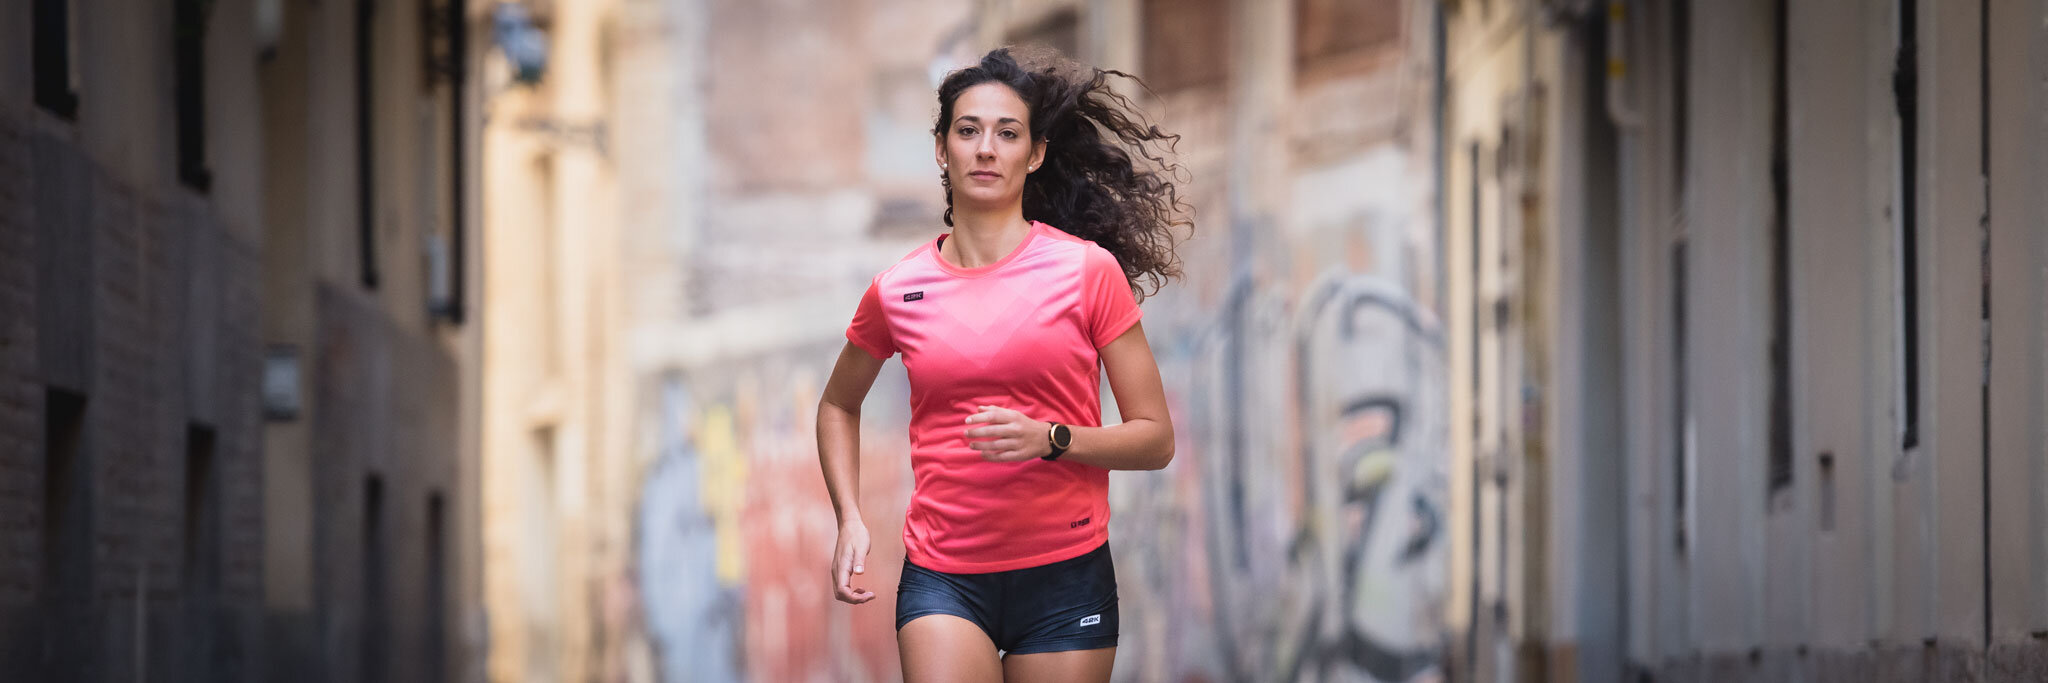 Running Donne - Abbigliamento running sentiero della donna running e multisport